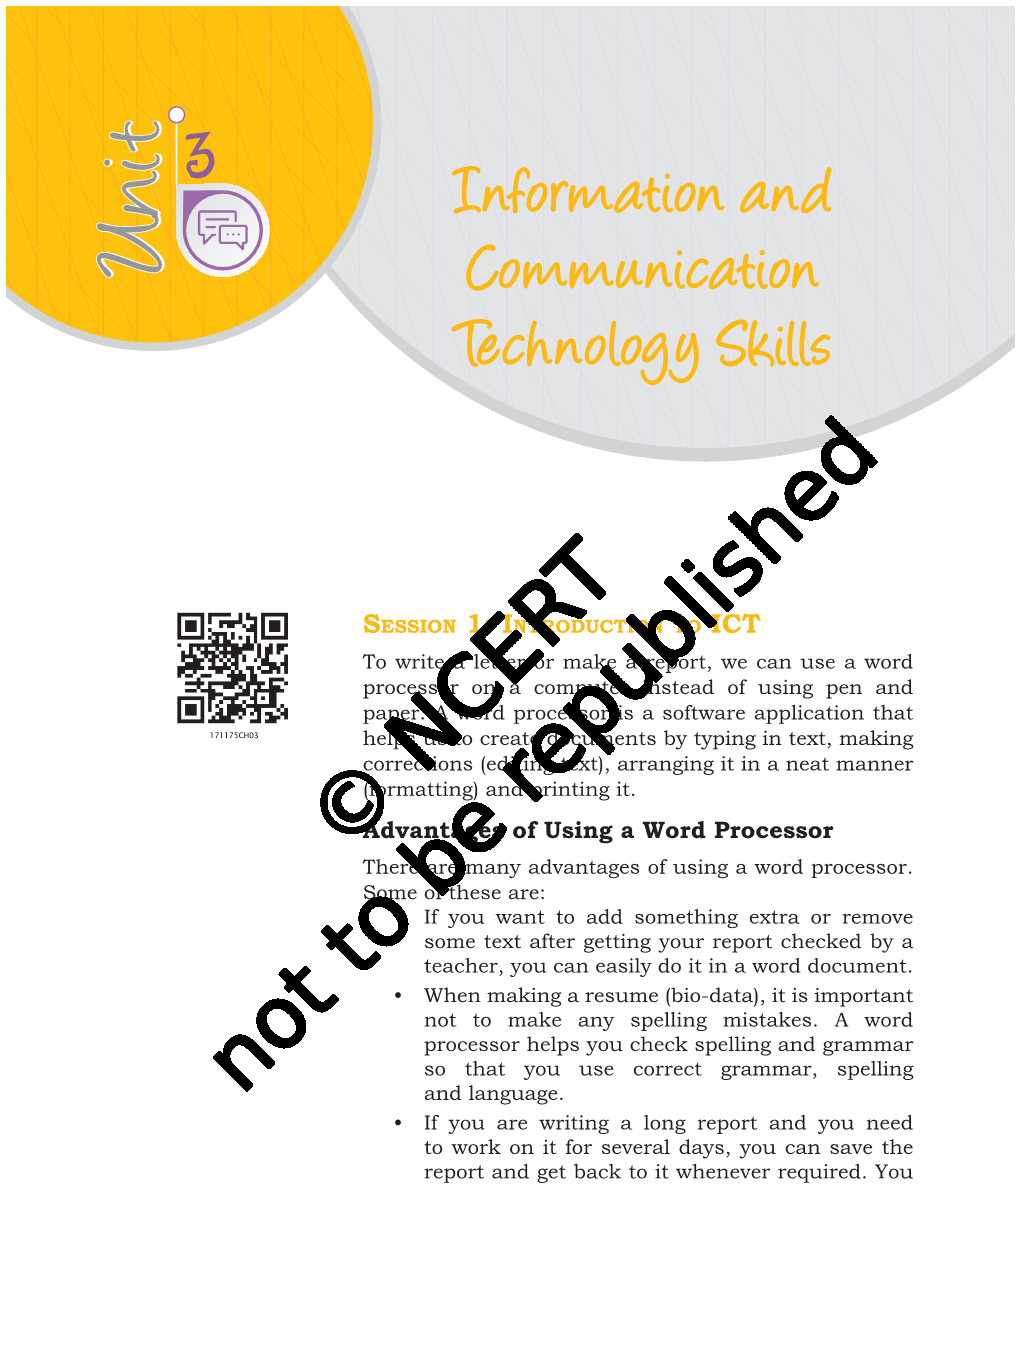 Information and Communication Technology Skills 107